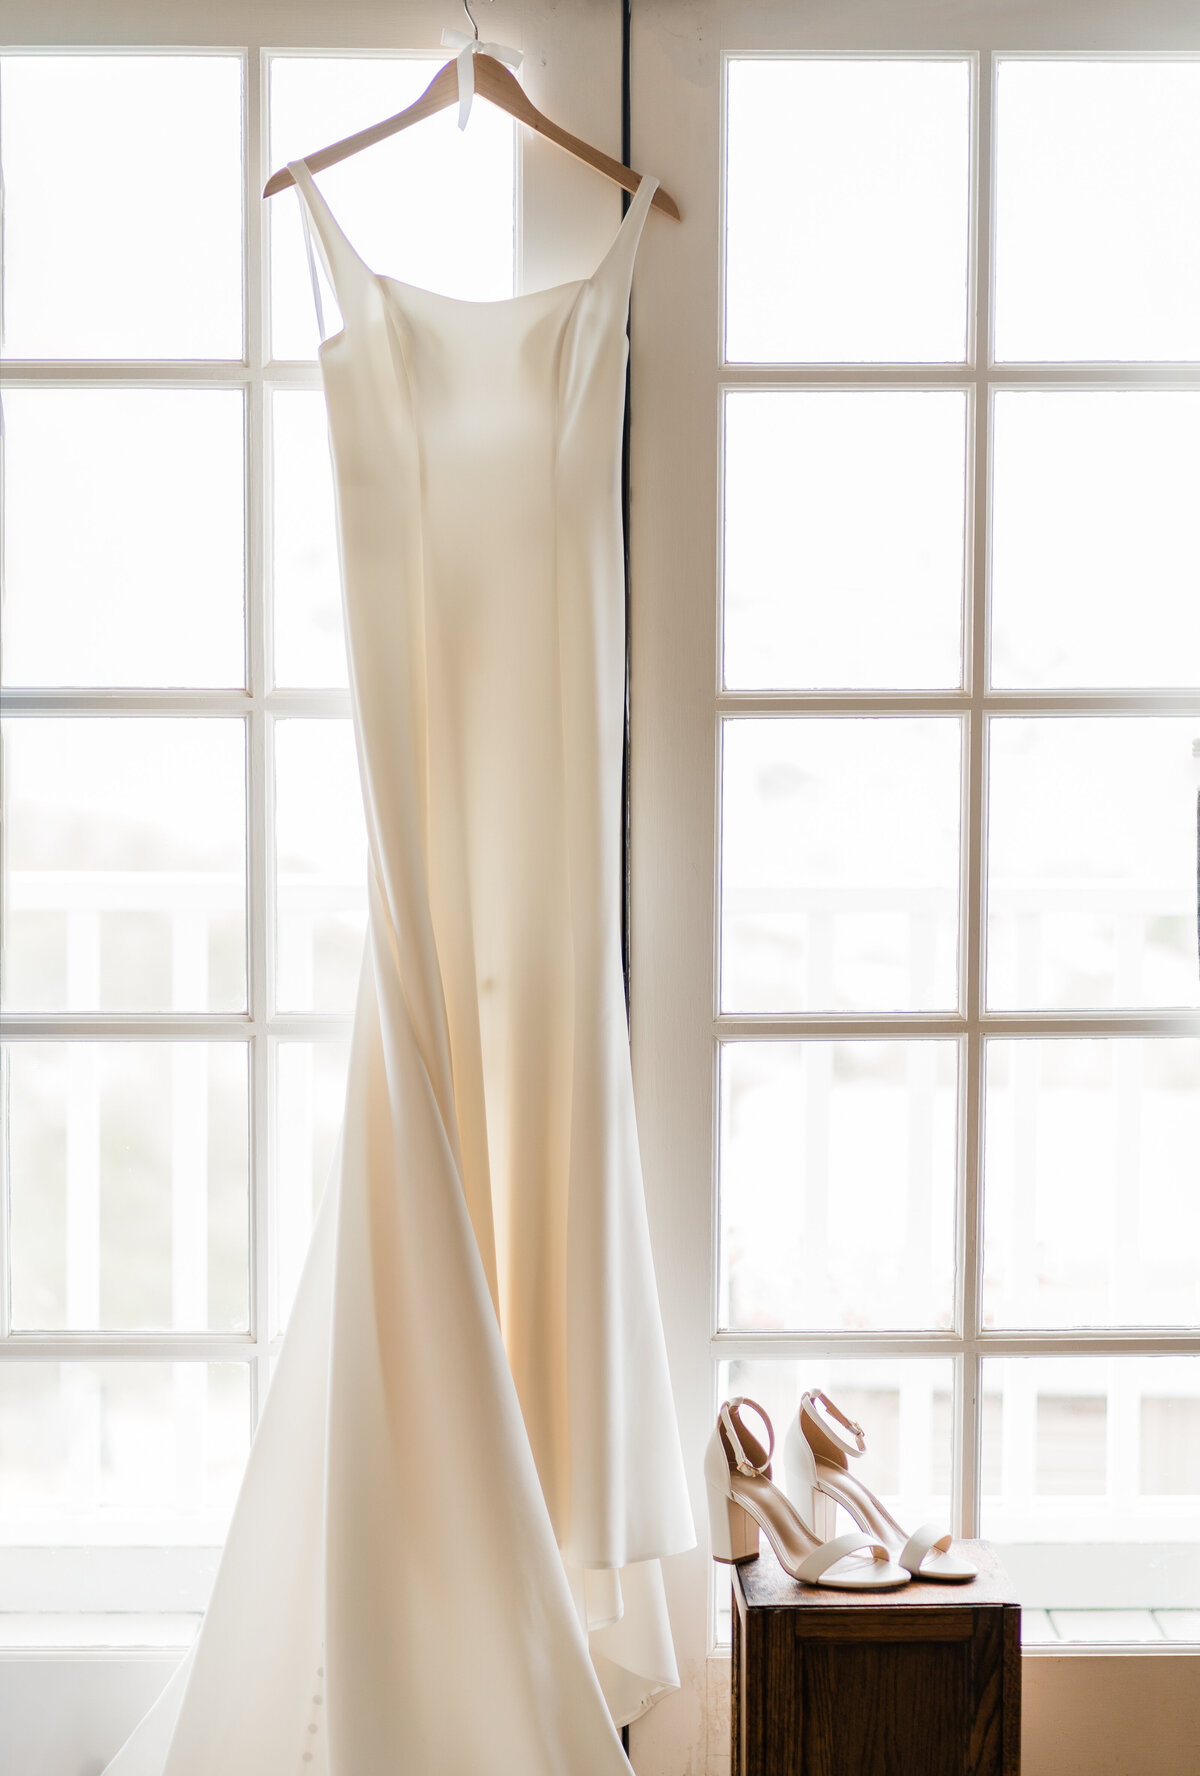 white wedding dress hanging in window